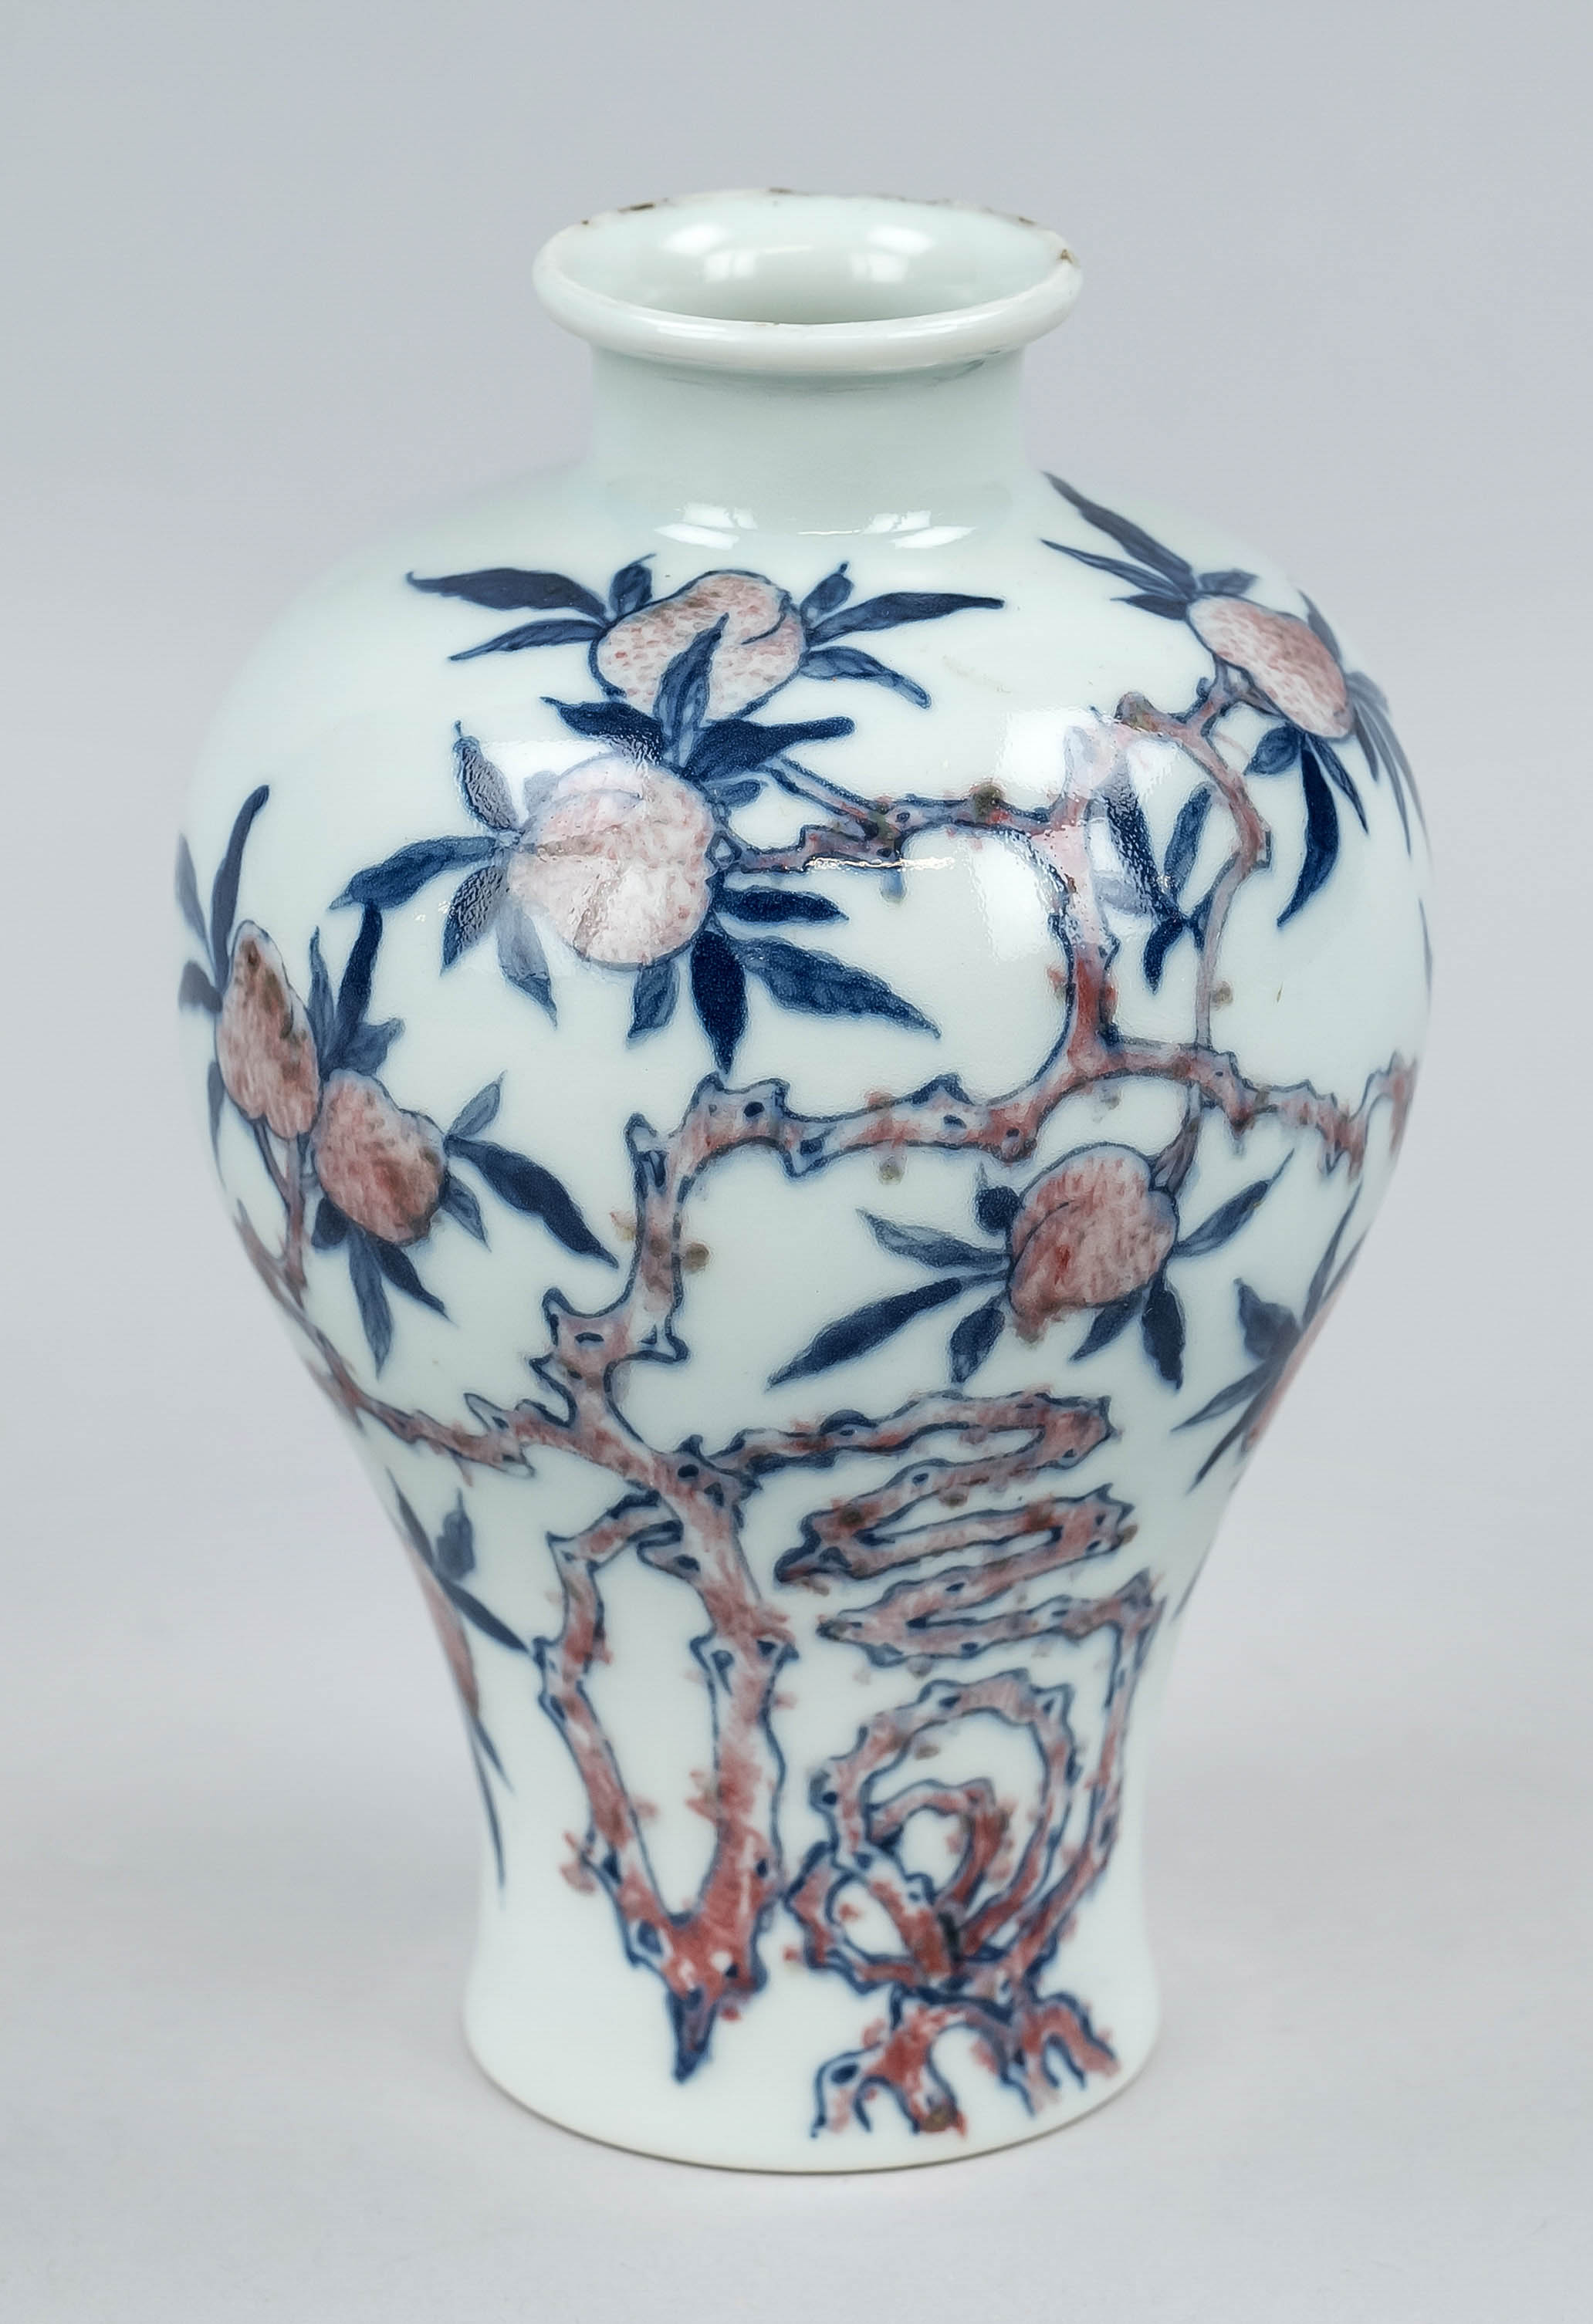 Peach vase, China, probably Republic period(1912-1949), porcelain shoulder vase with underglazed